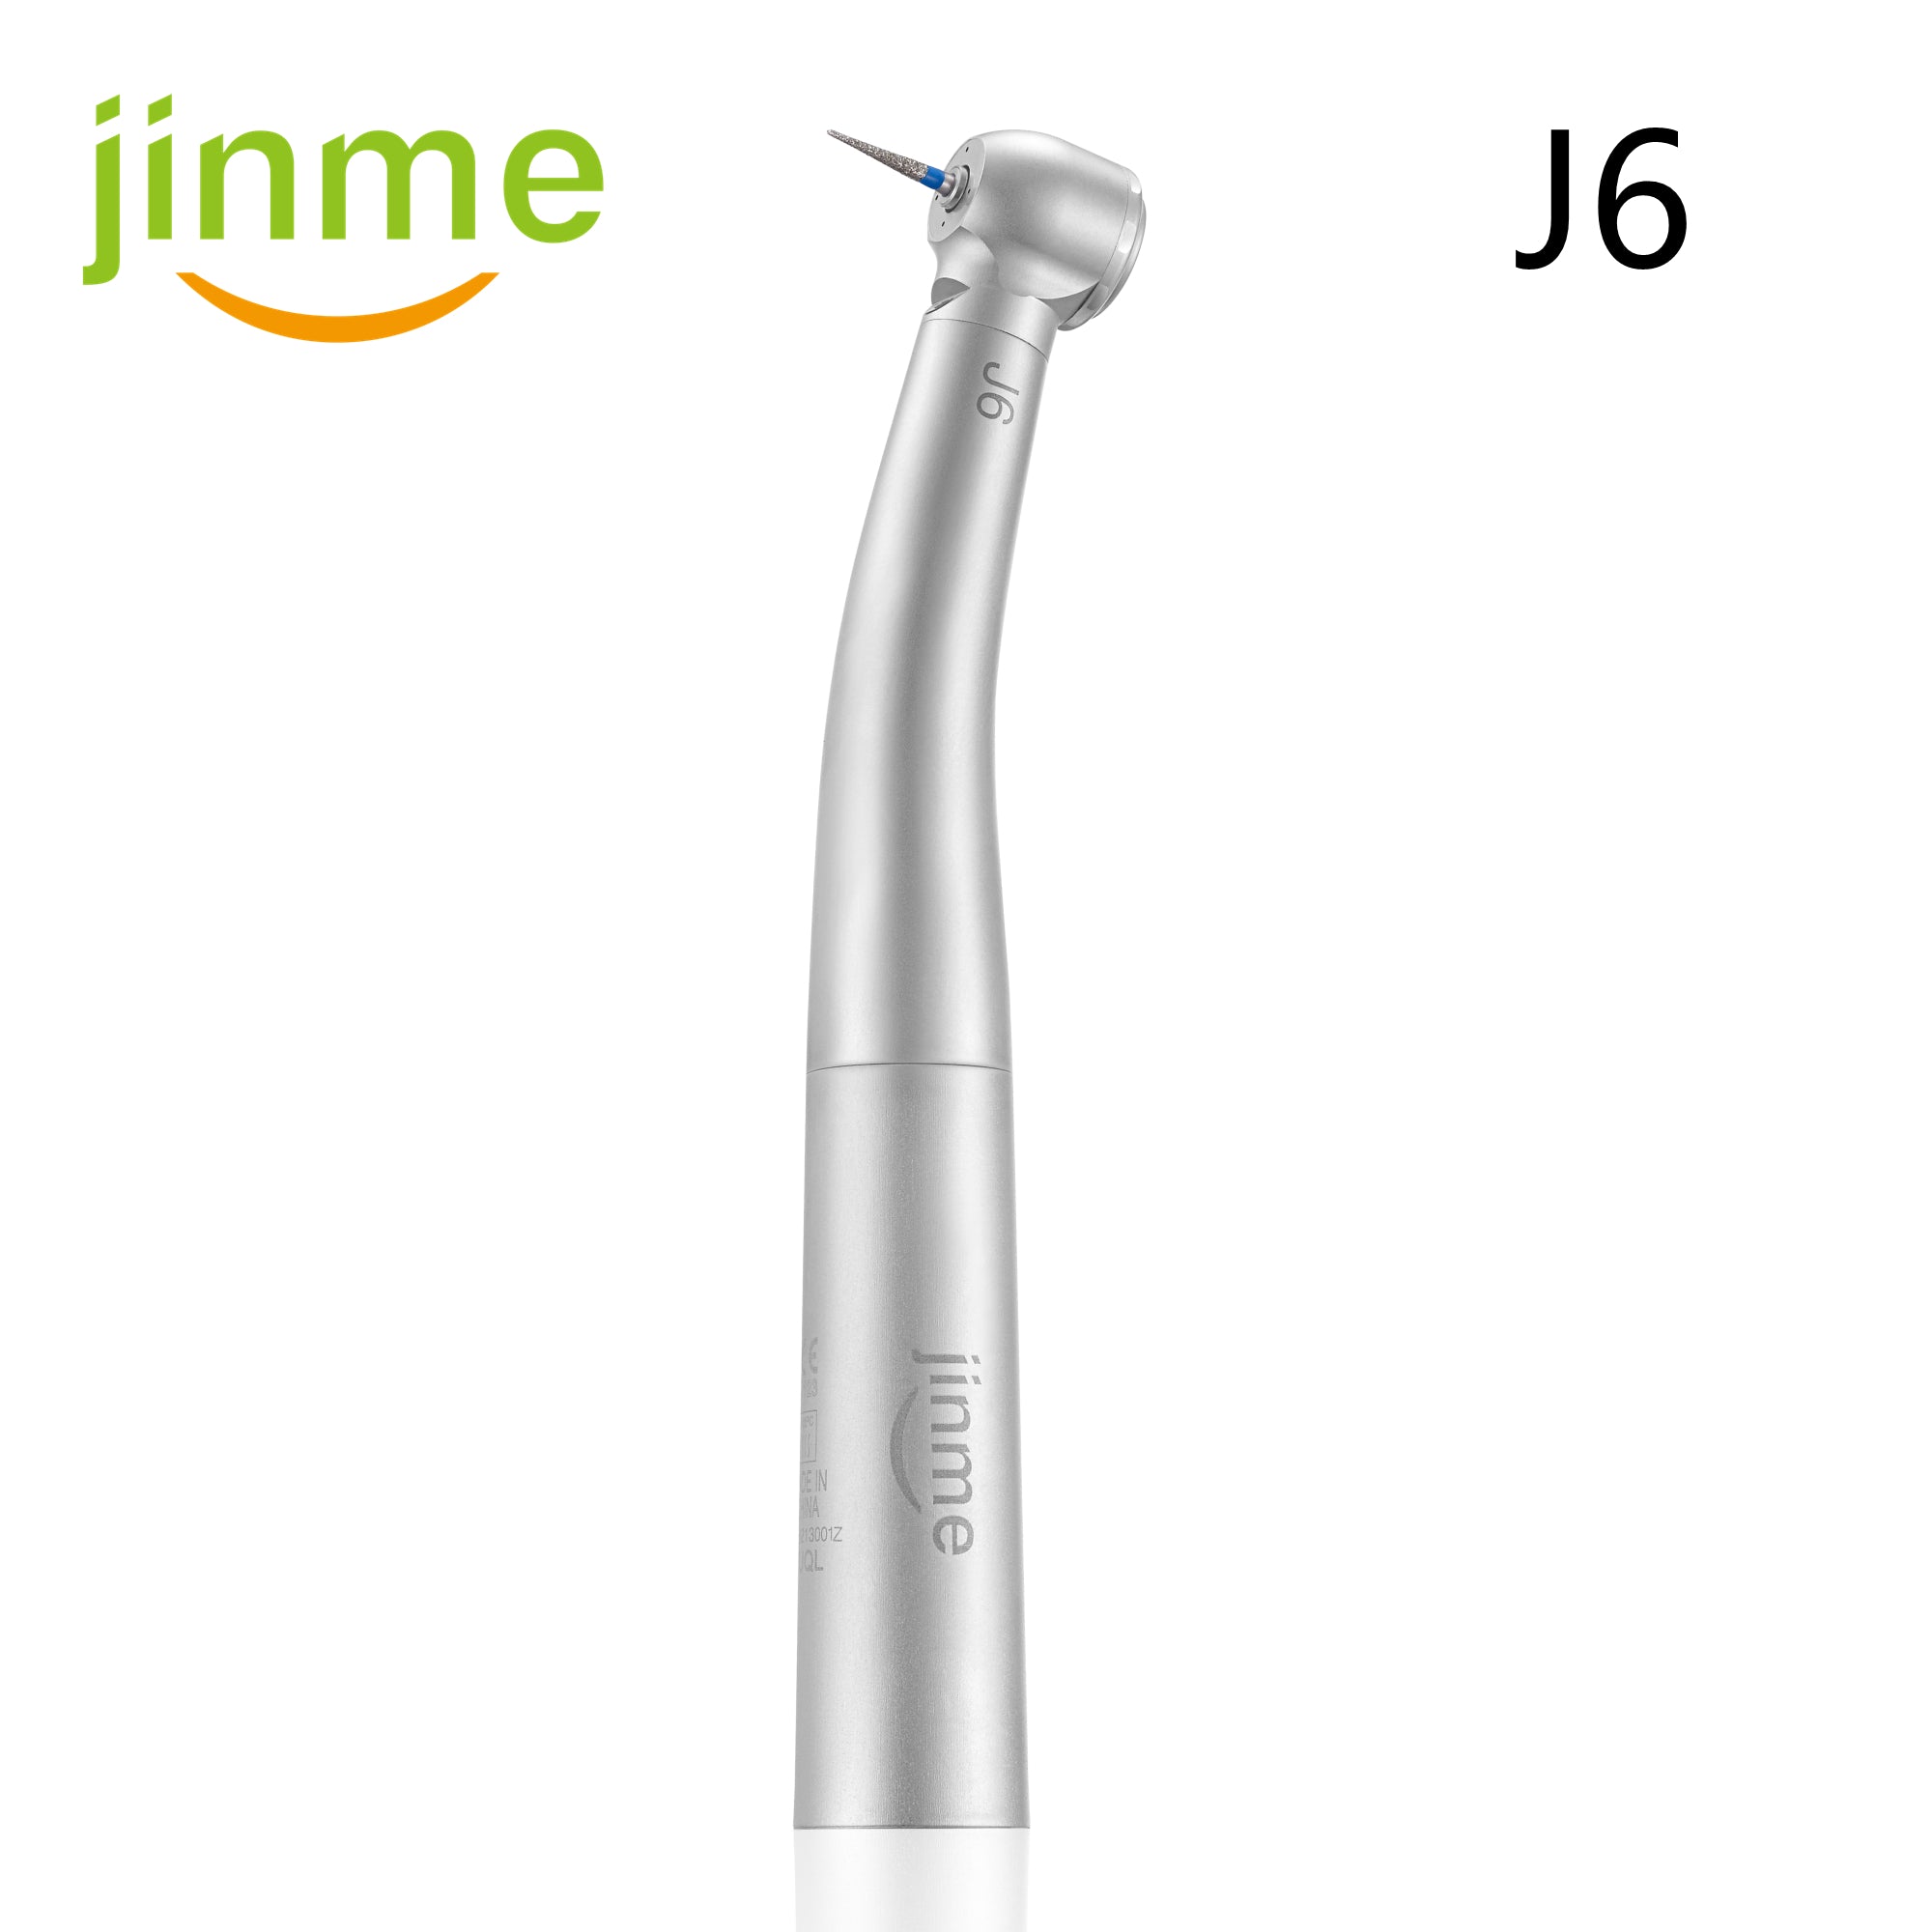 Jinme J6 Kavo/NSK type Air Driven HighSpeed Handpiece w/fiber optic